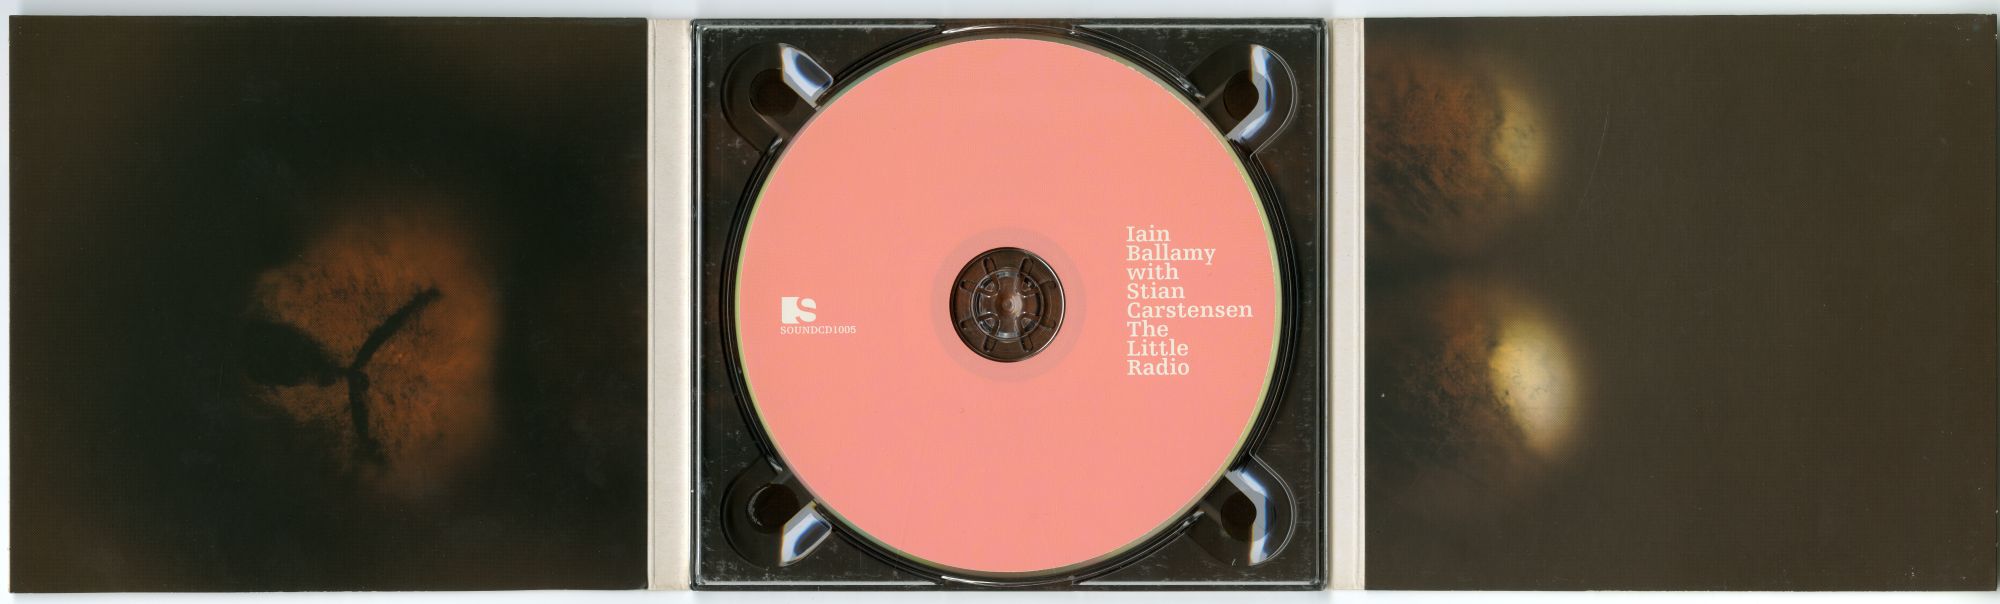 Iain Ballamy With Stian Carstensen『The Little Radio』（2004年、	Sound Recordings）02